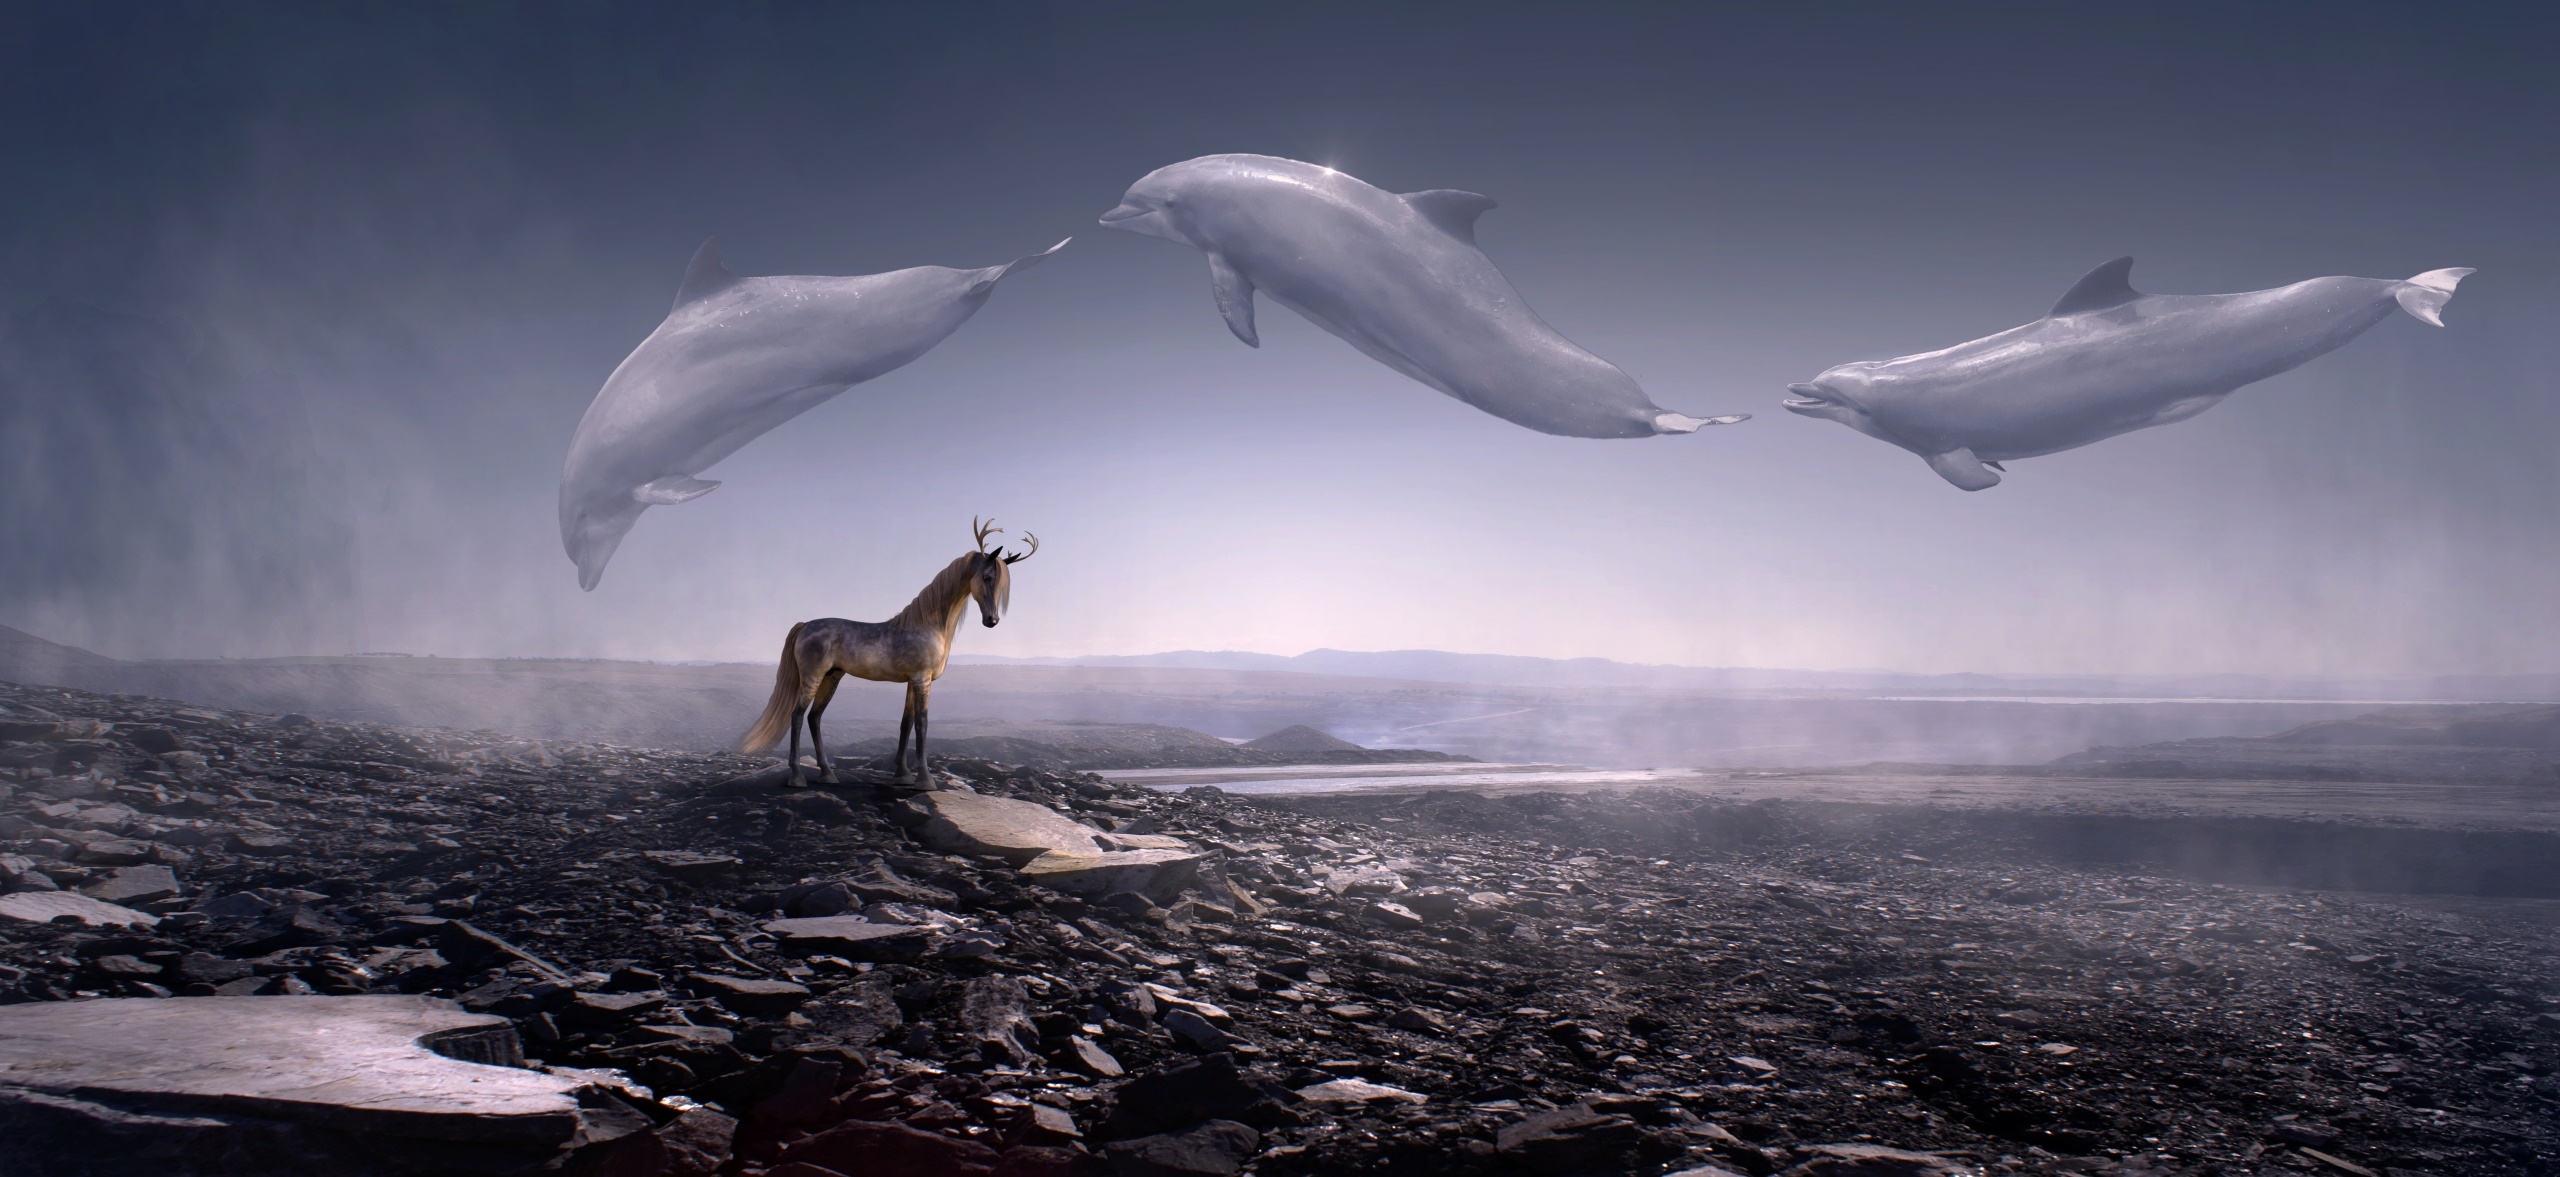 General 2560x1177 artwork animals dolphin landscape sky fantasy art digital art